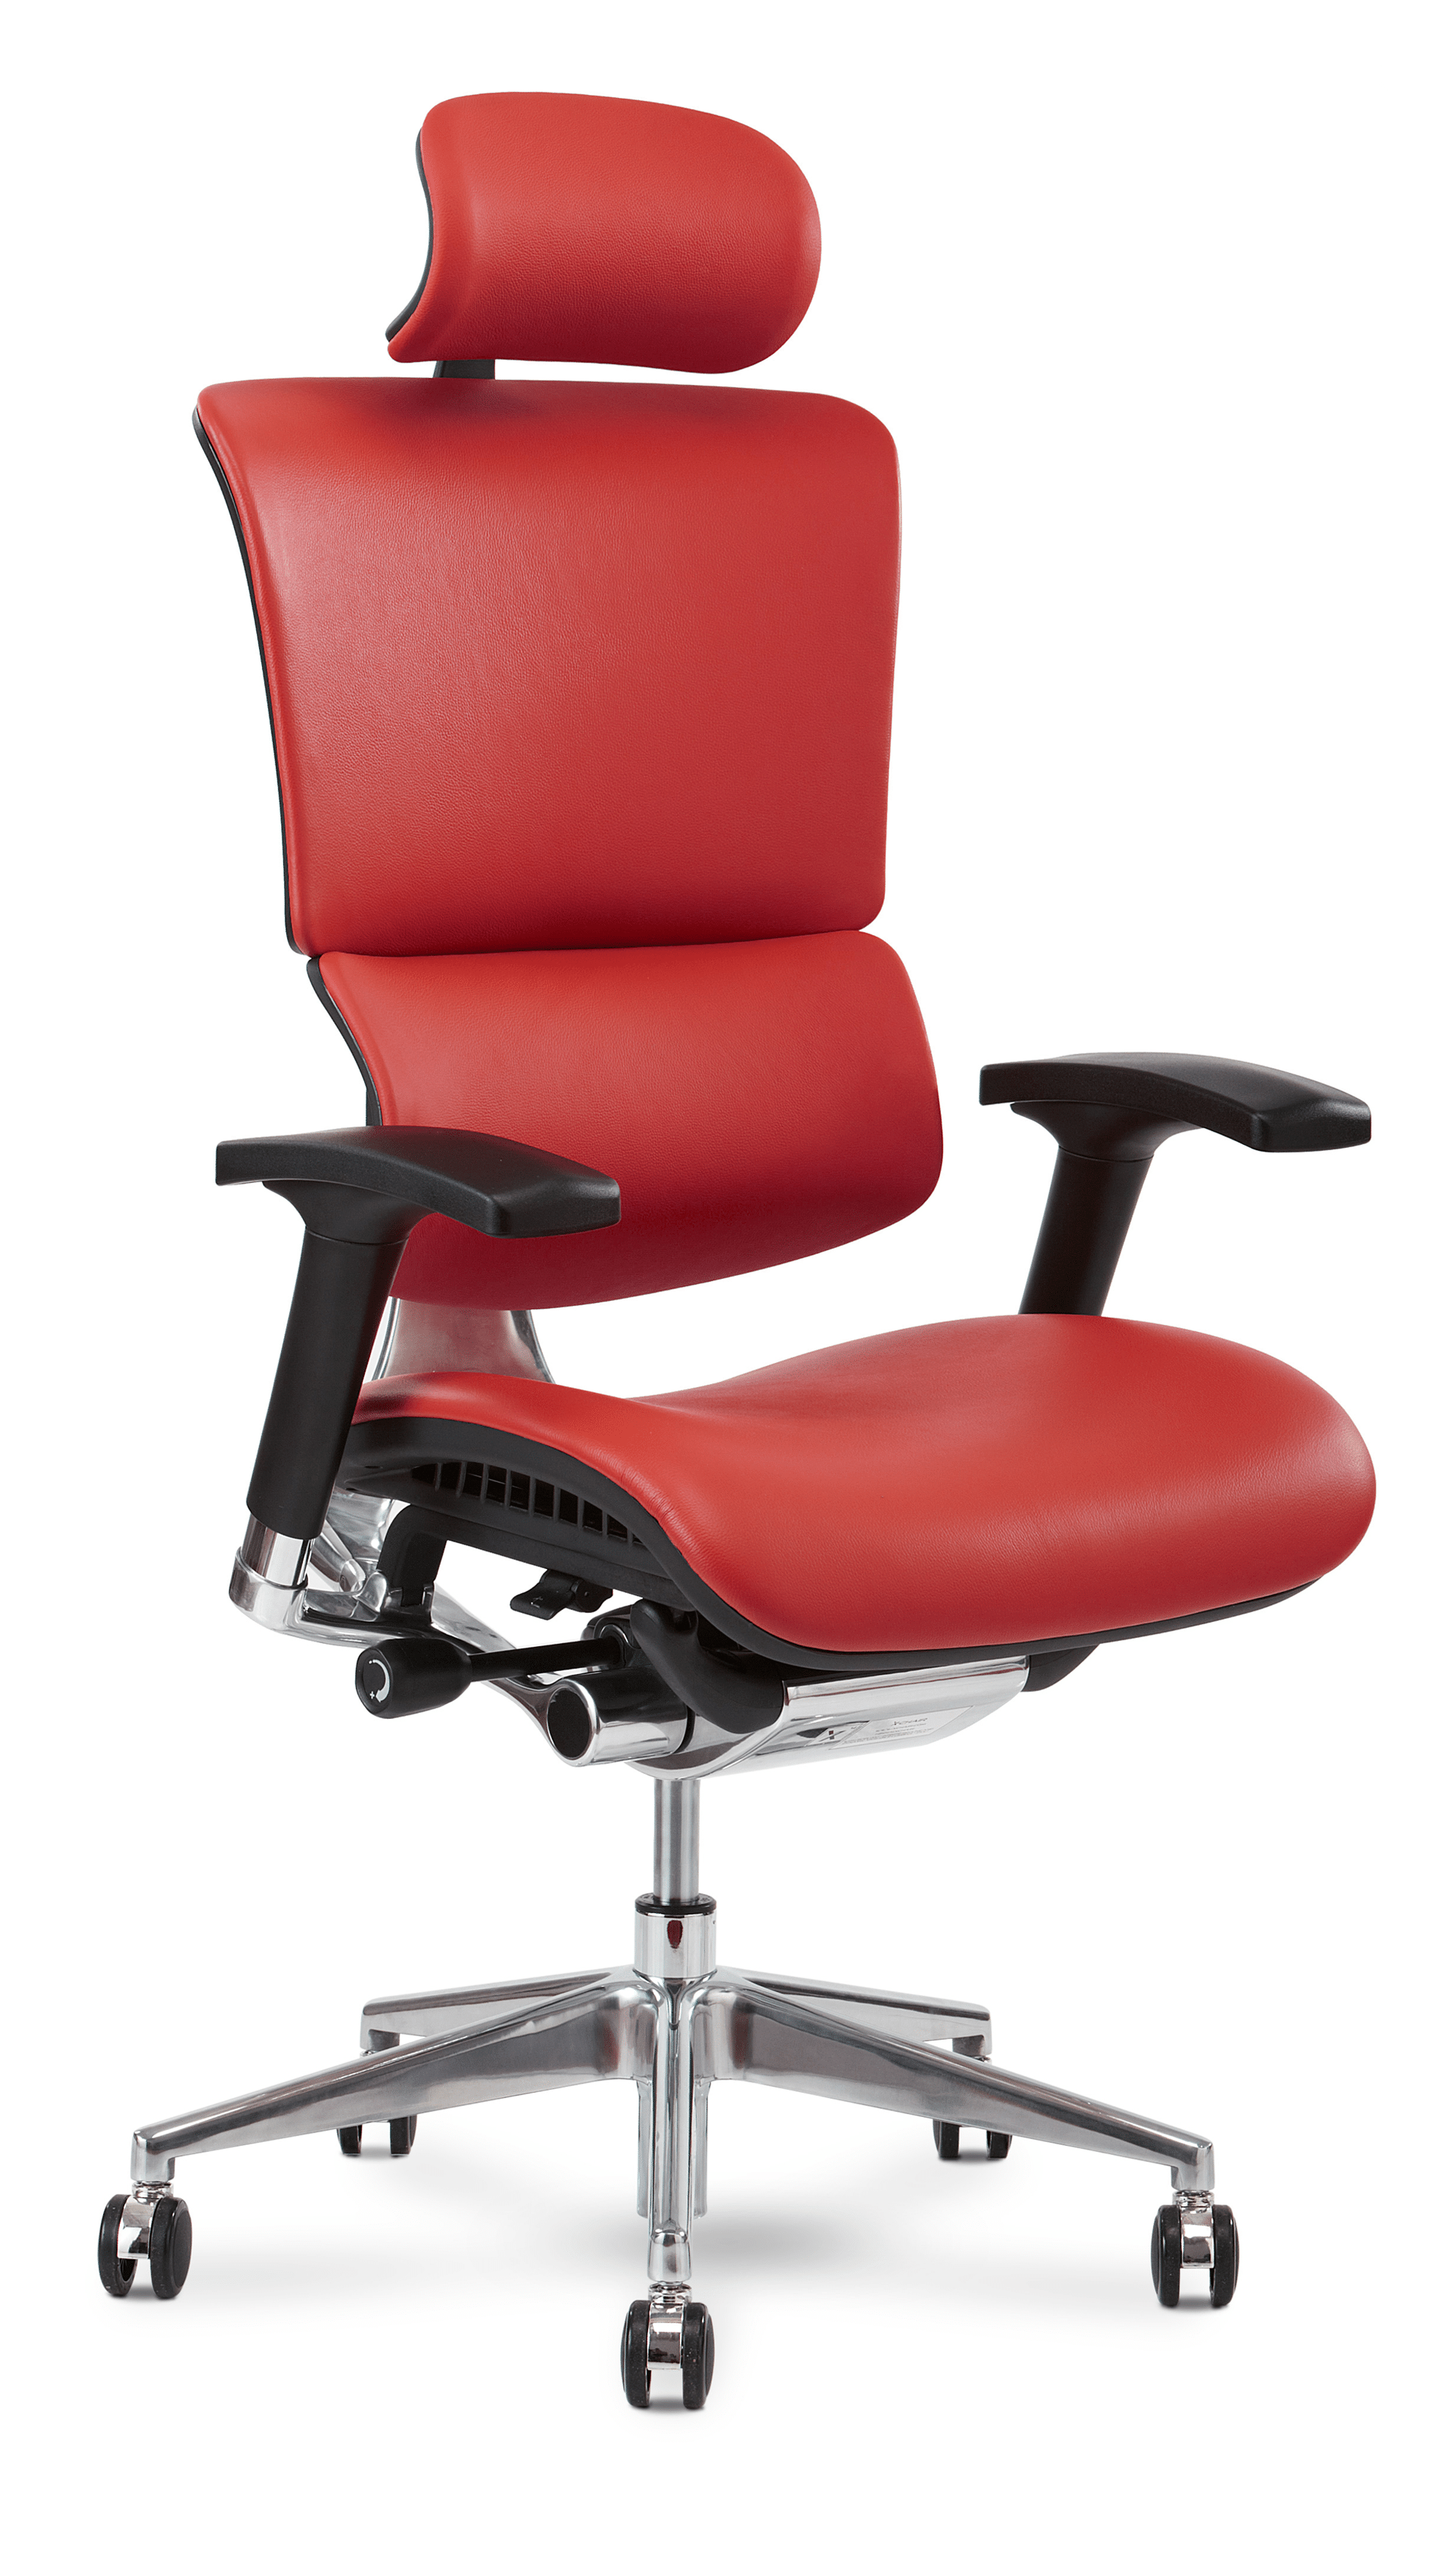 X-Chair Ergonomic Office Chair - X4 with Headrest